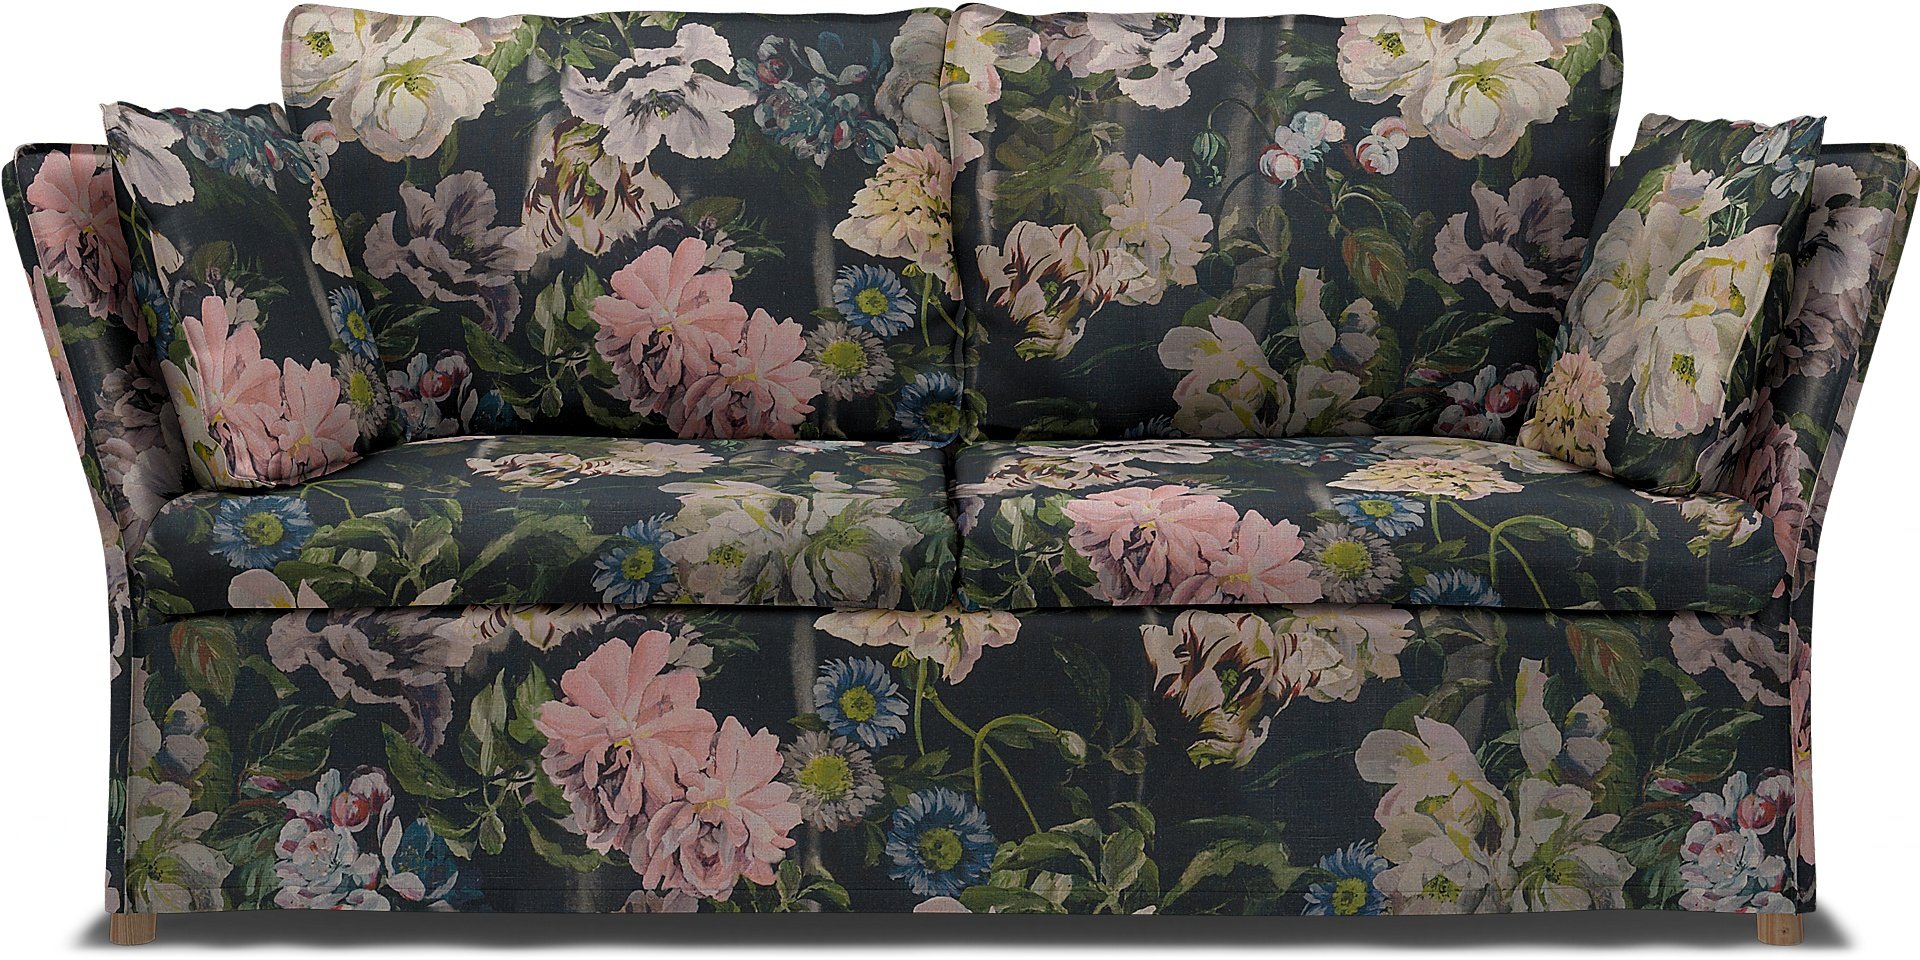 IKEA - Backsalen 2 seater sofa, Delft Flower - Graphite, Linen - Bemz